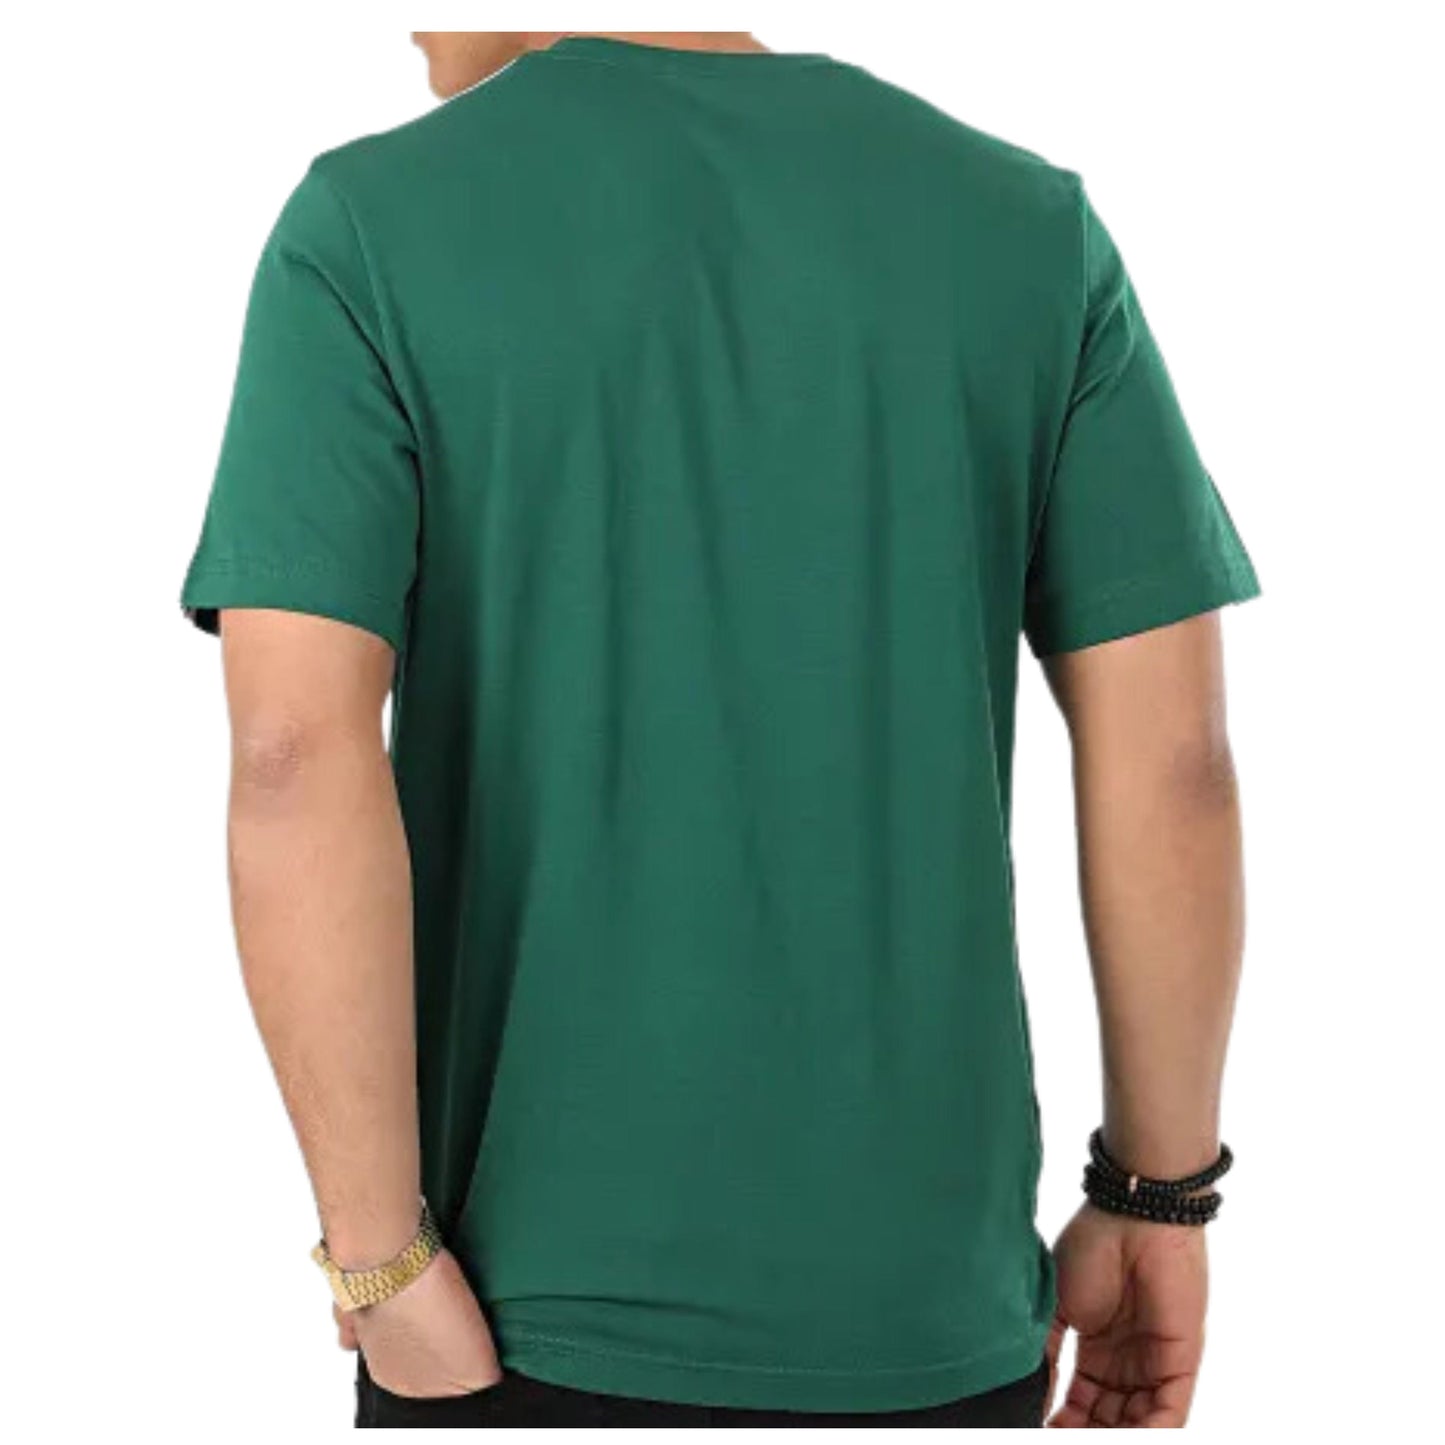 ADIDAS Mens Tops M / Green ADIDAS - Essential 3 Stripes T-Shirt